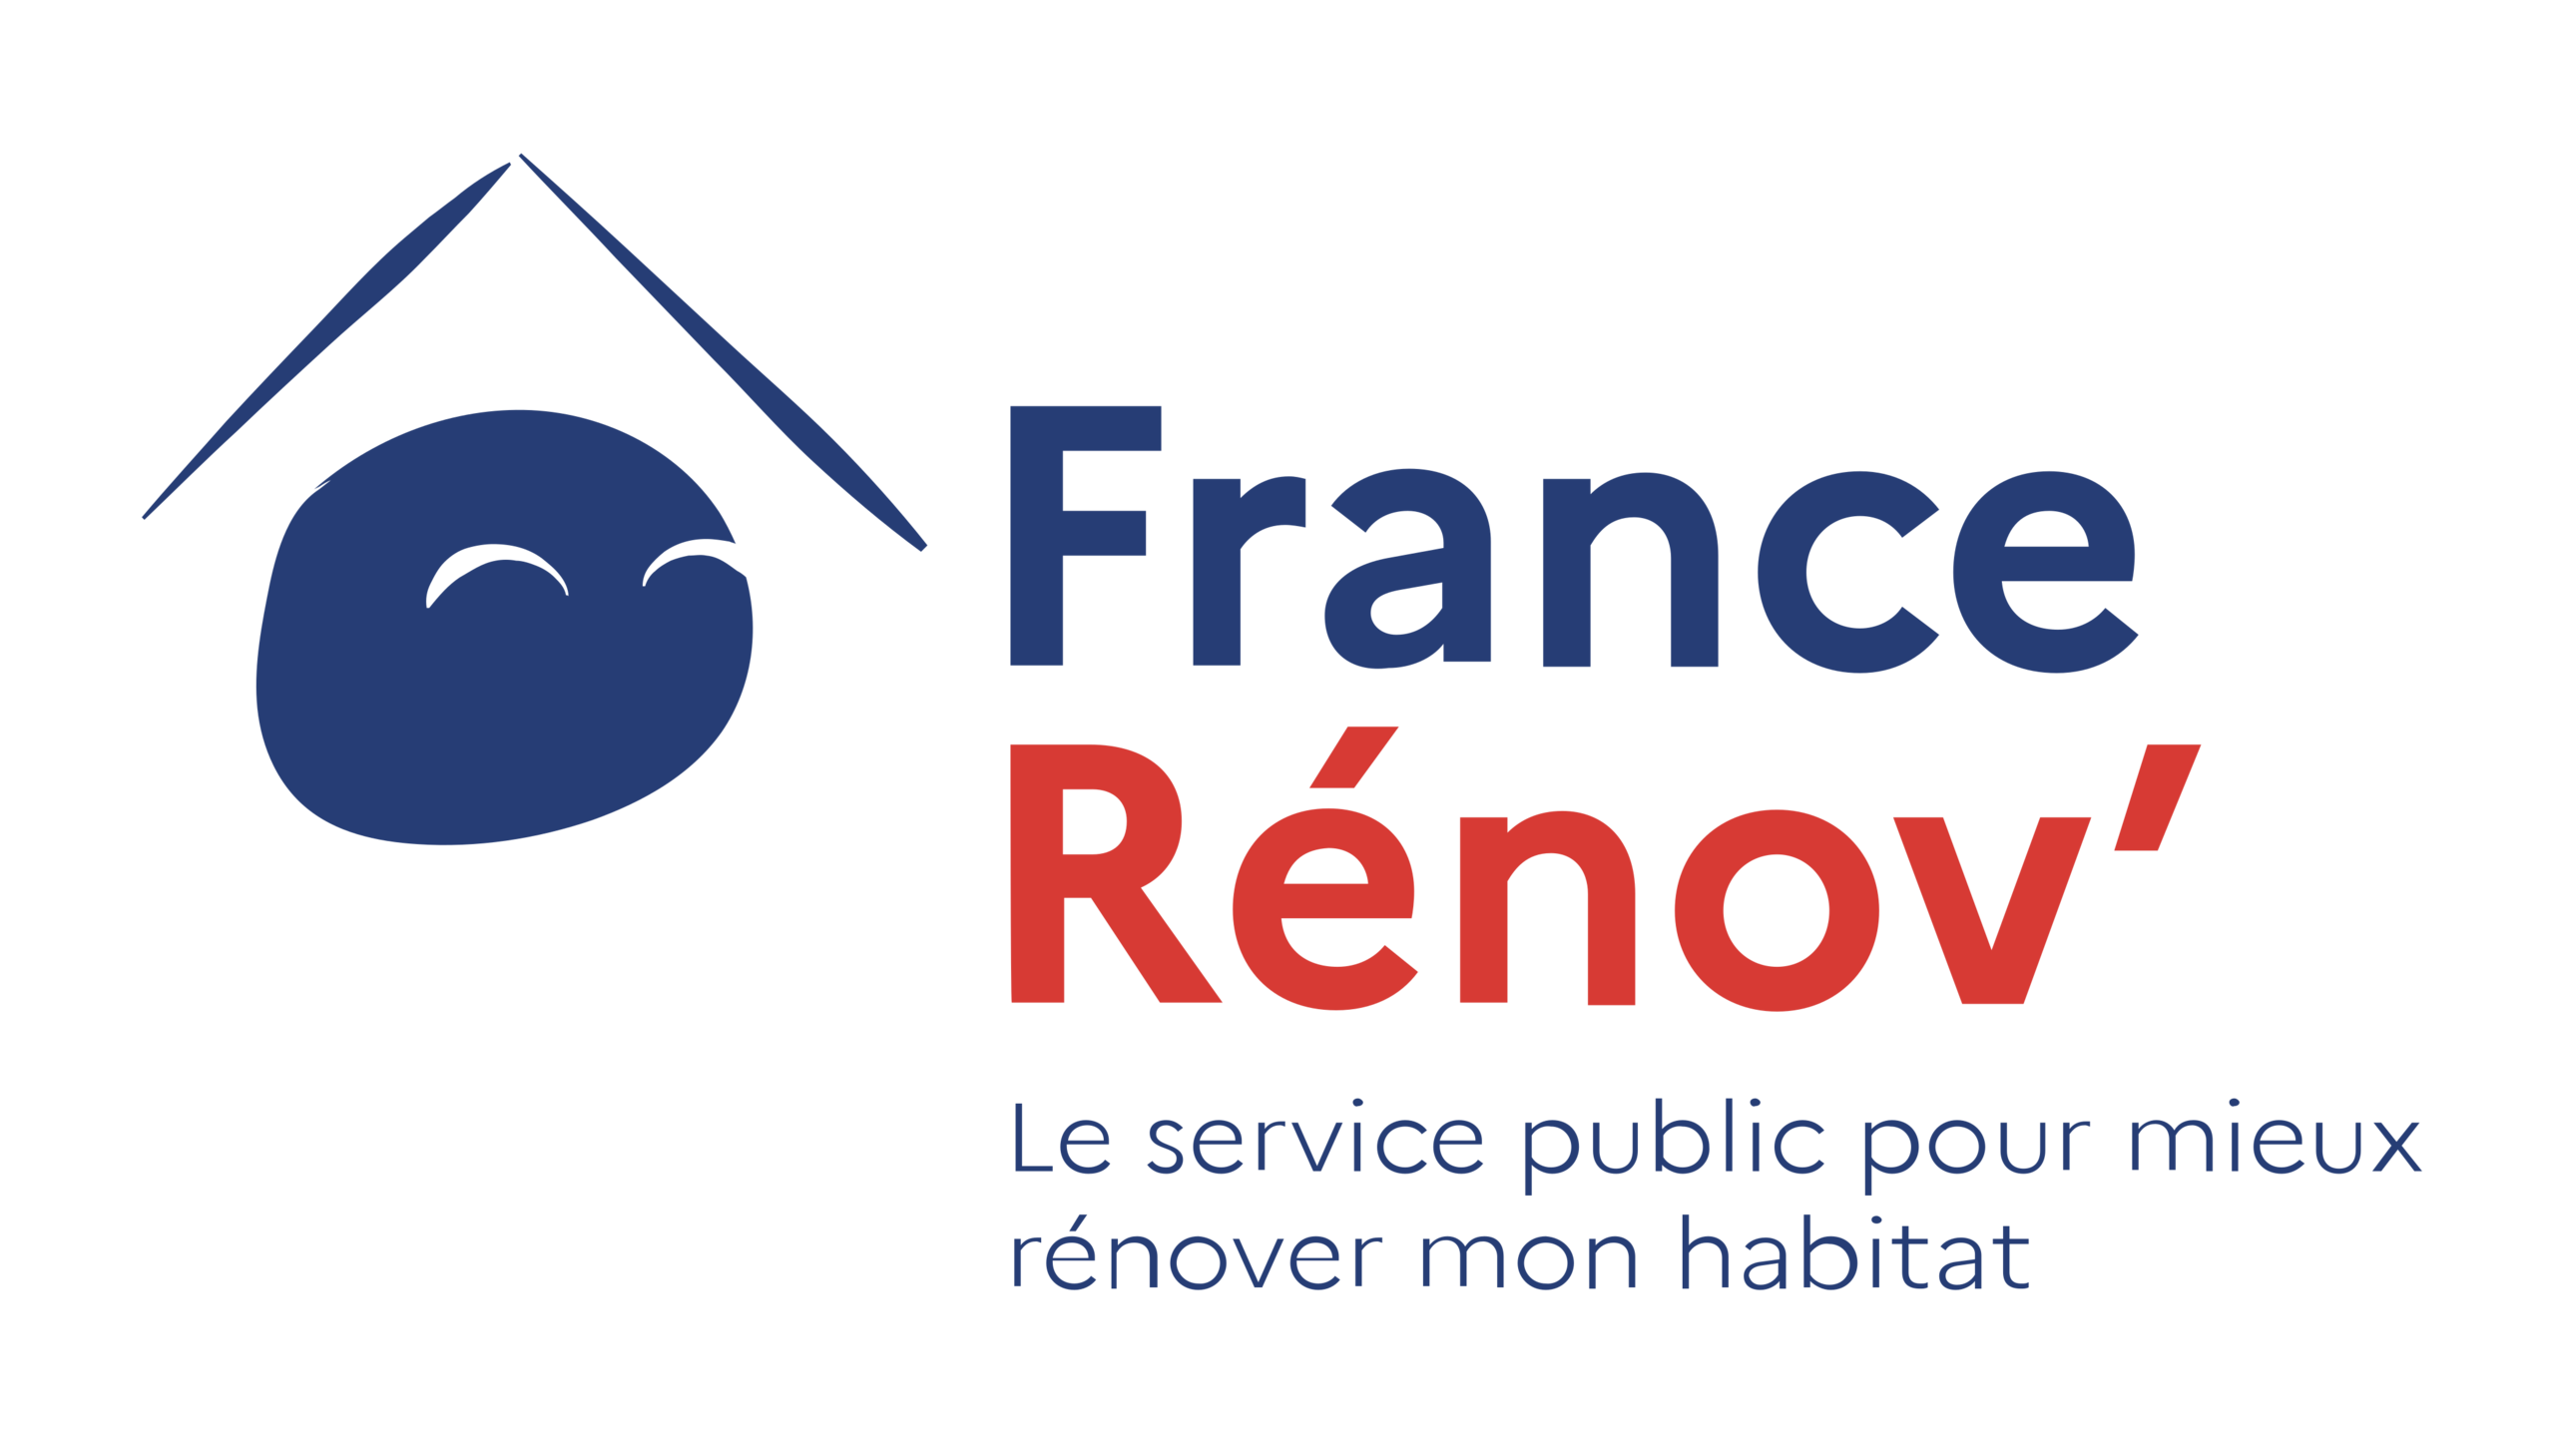 Fichier:France-renov Logo.png — Wikipédia